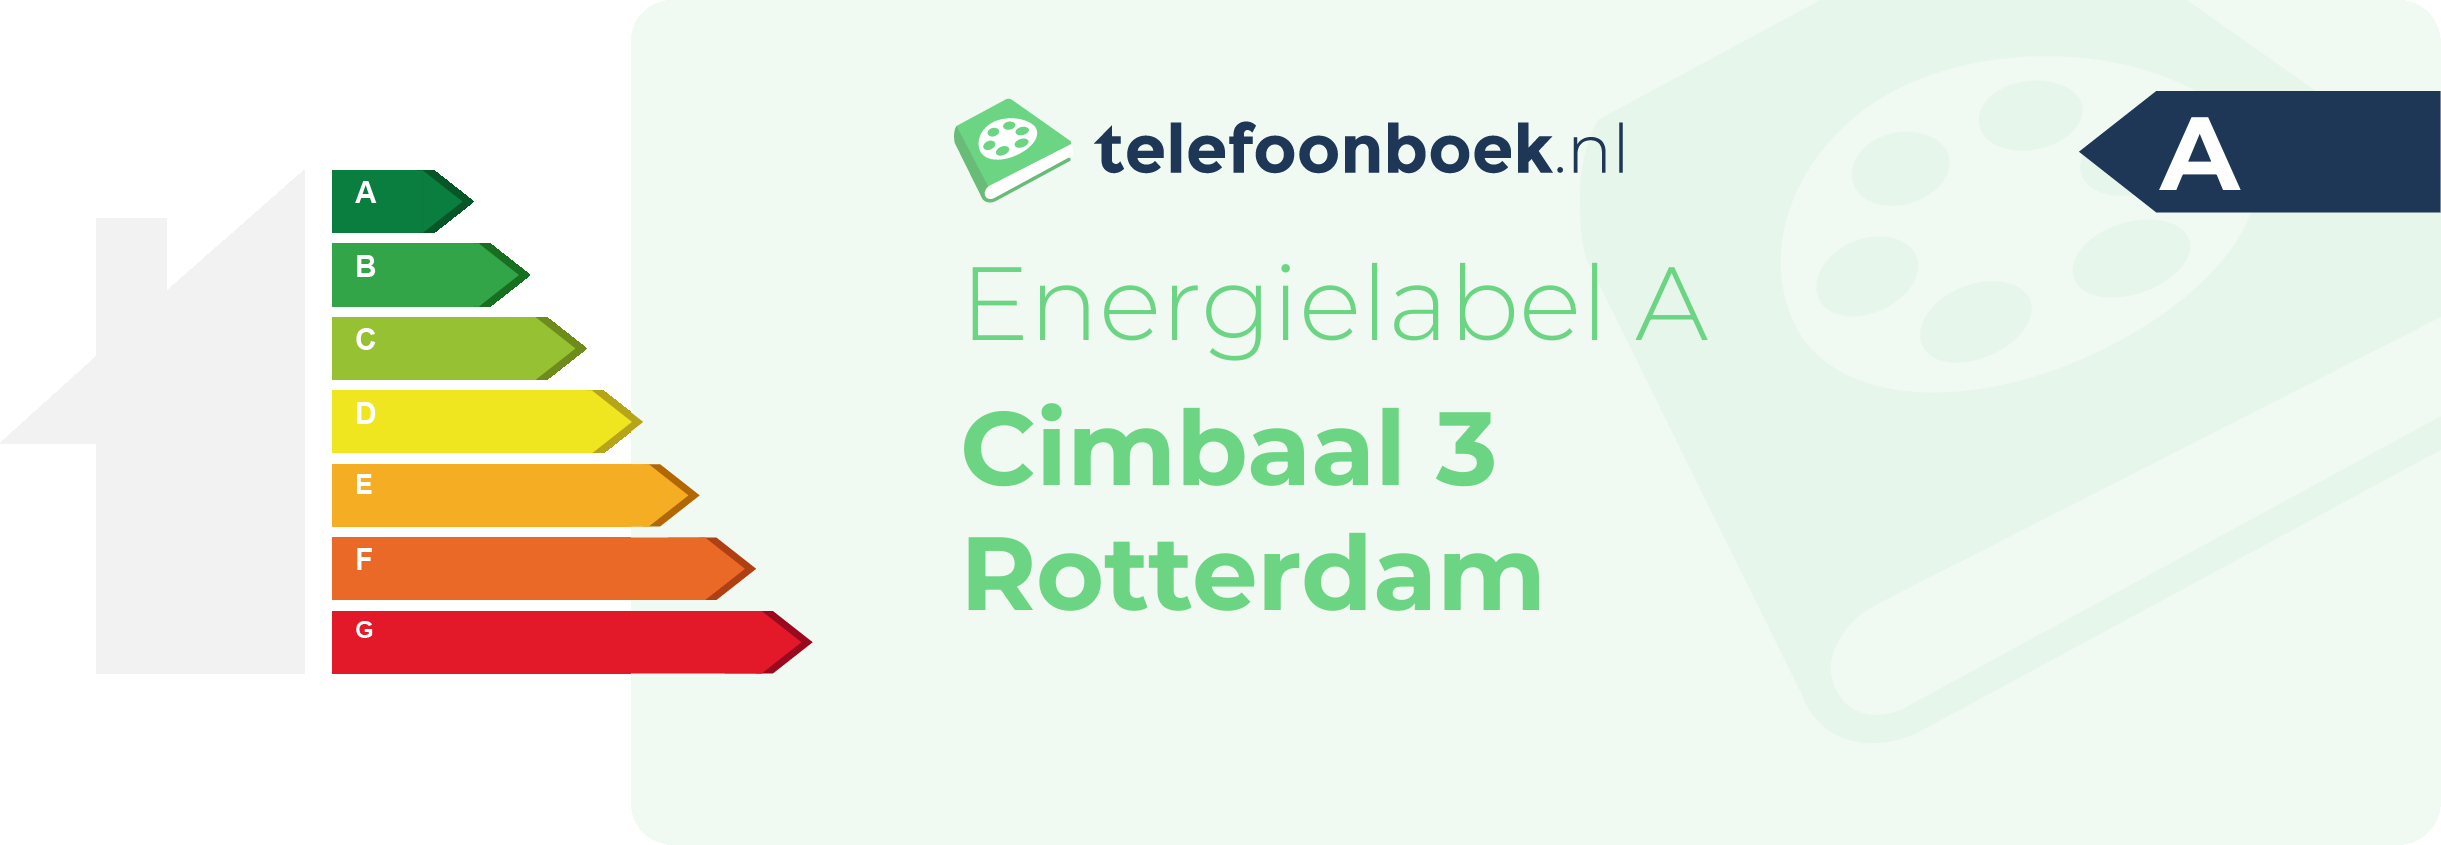 Energielabel Cimbaal 3 Rotterdam